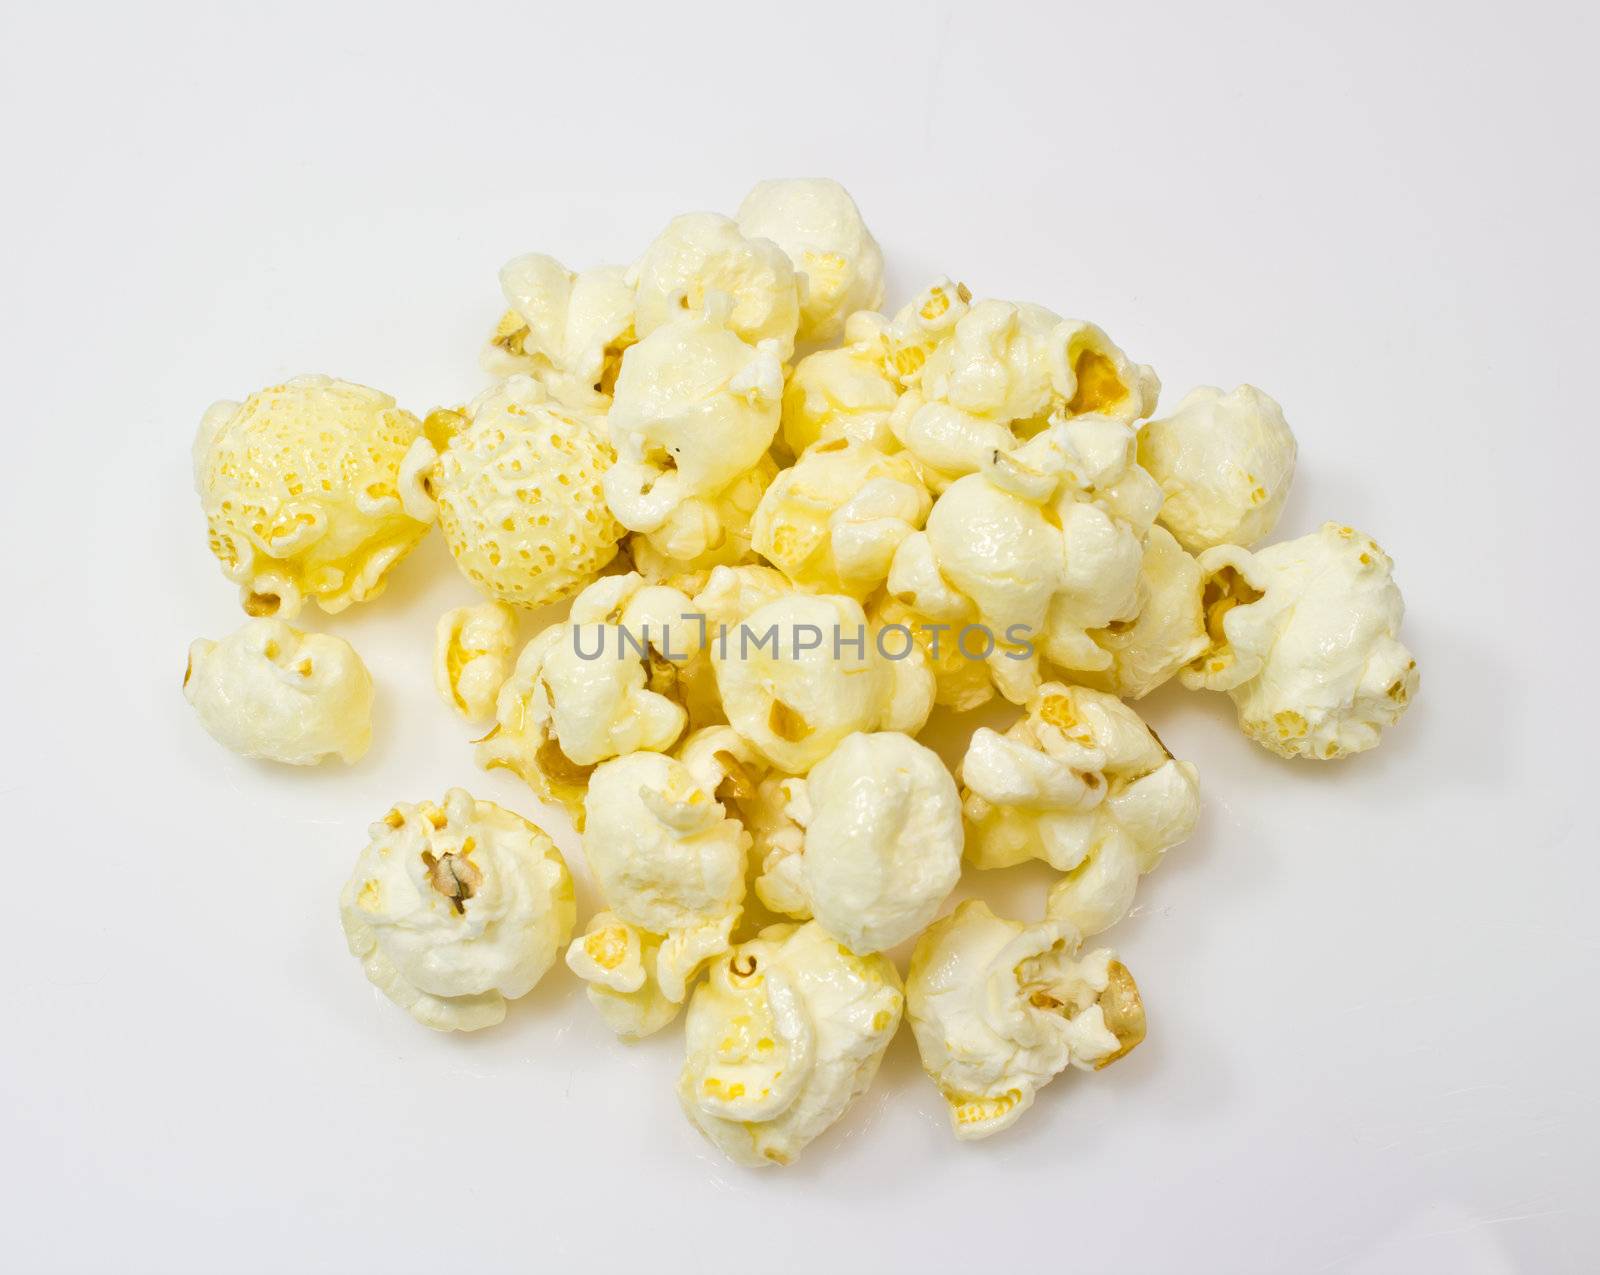 caramel candy popcorn on a white background by kurapy